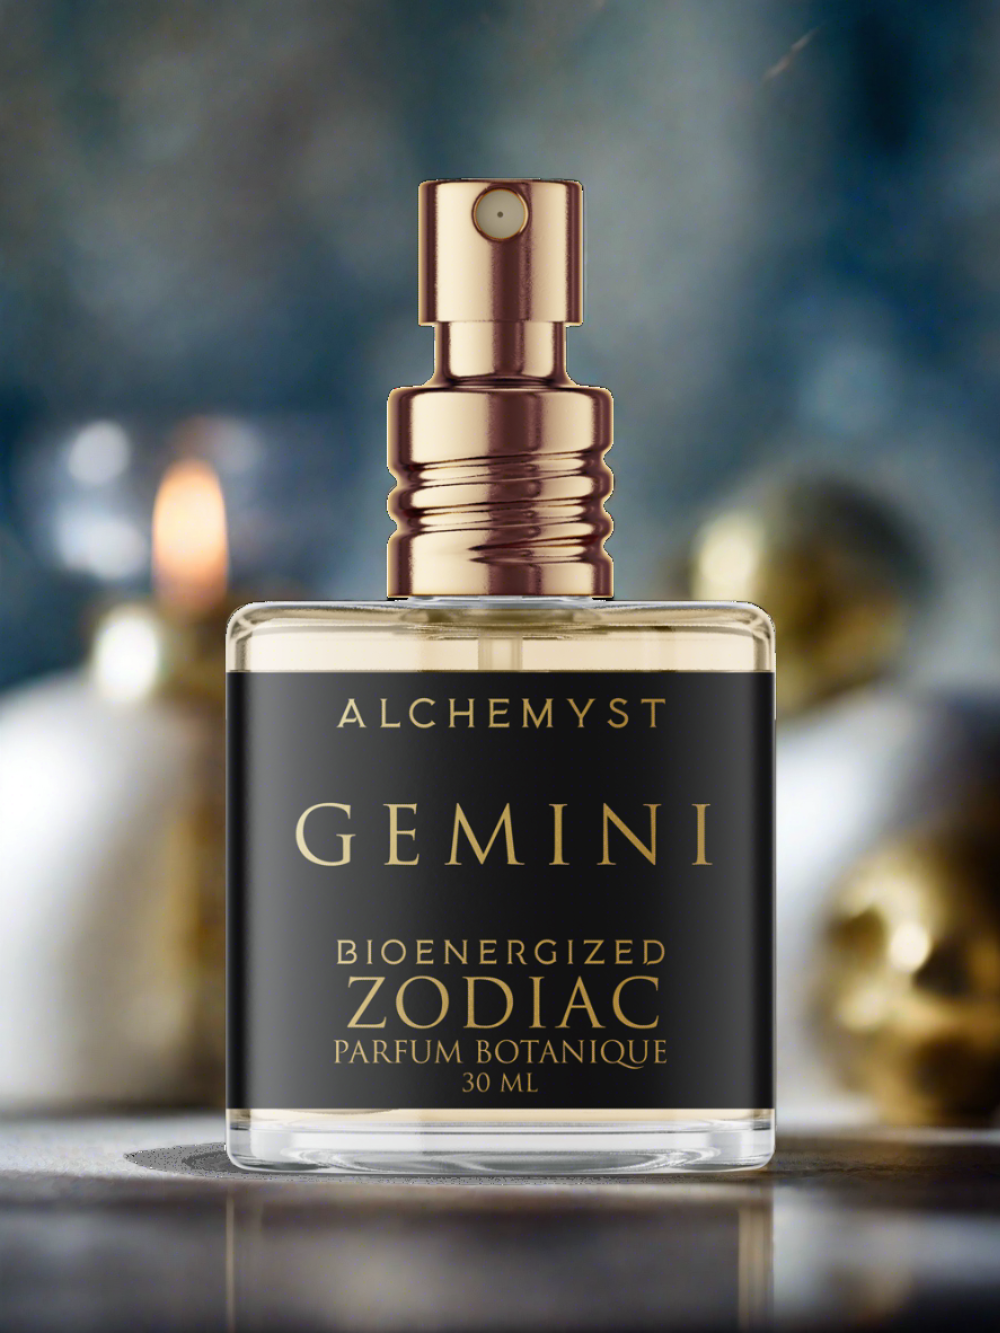 GEMINI Zodiac Bioenergized Natural Perfume Alchemyst Co